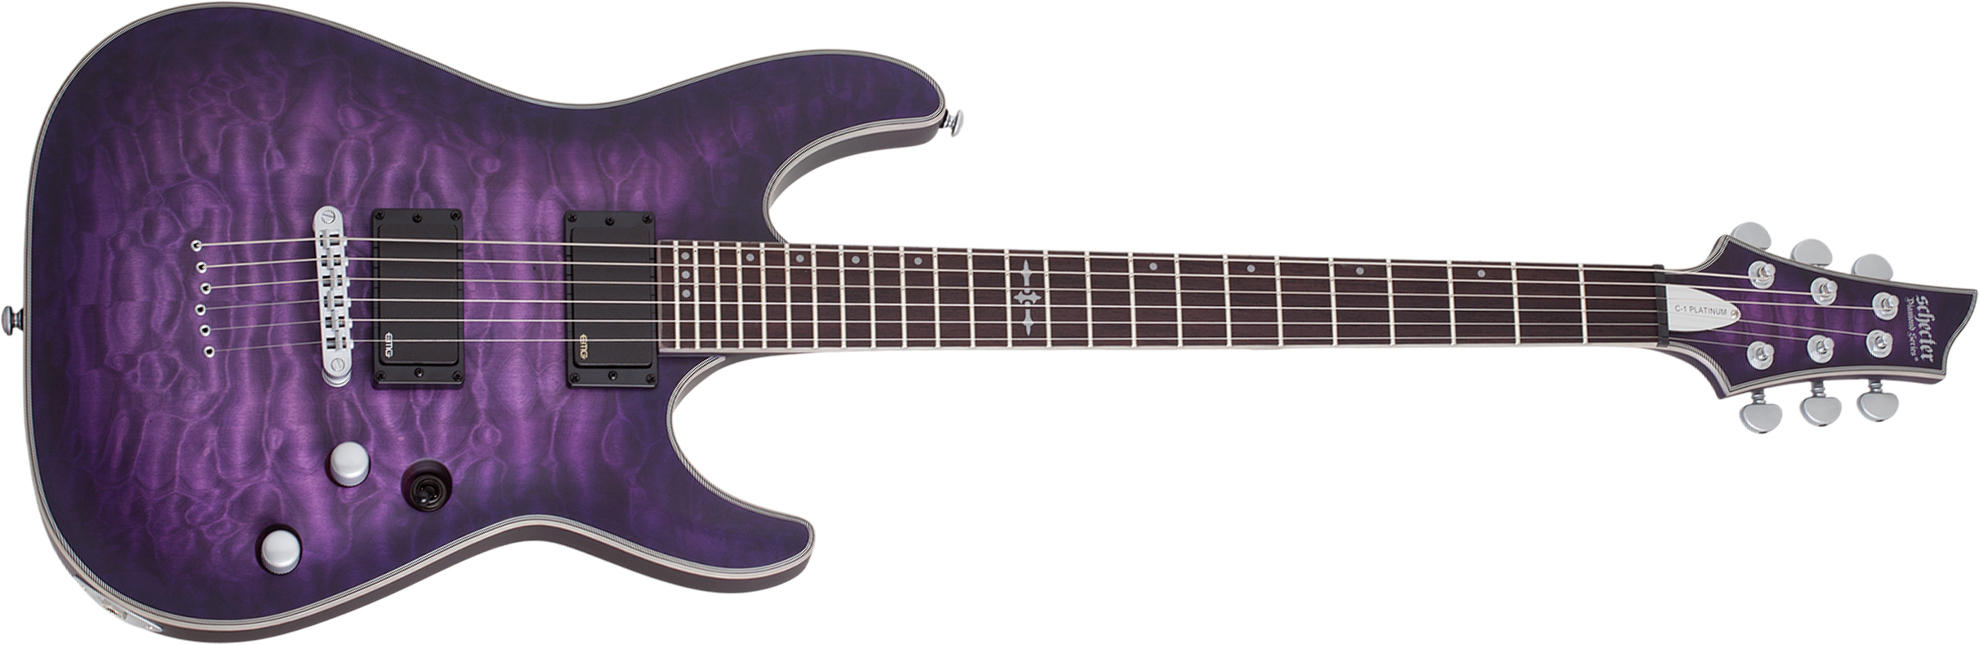 Schecter C-1 Platinum 2h Emg Ht Eb - Satin Purple Burst - E-Gitarre in Str-Form - Main picture